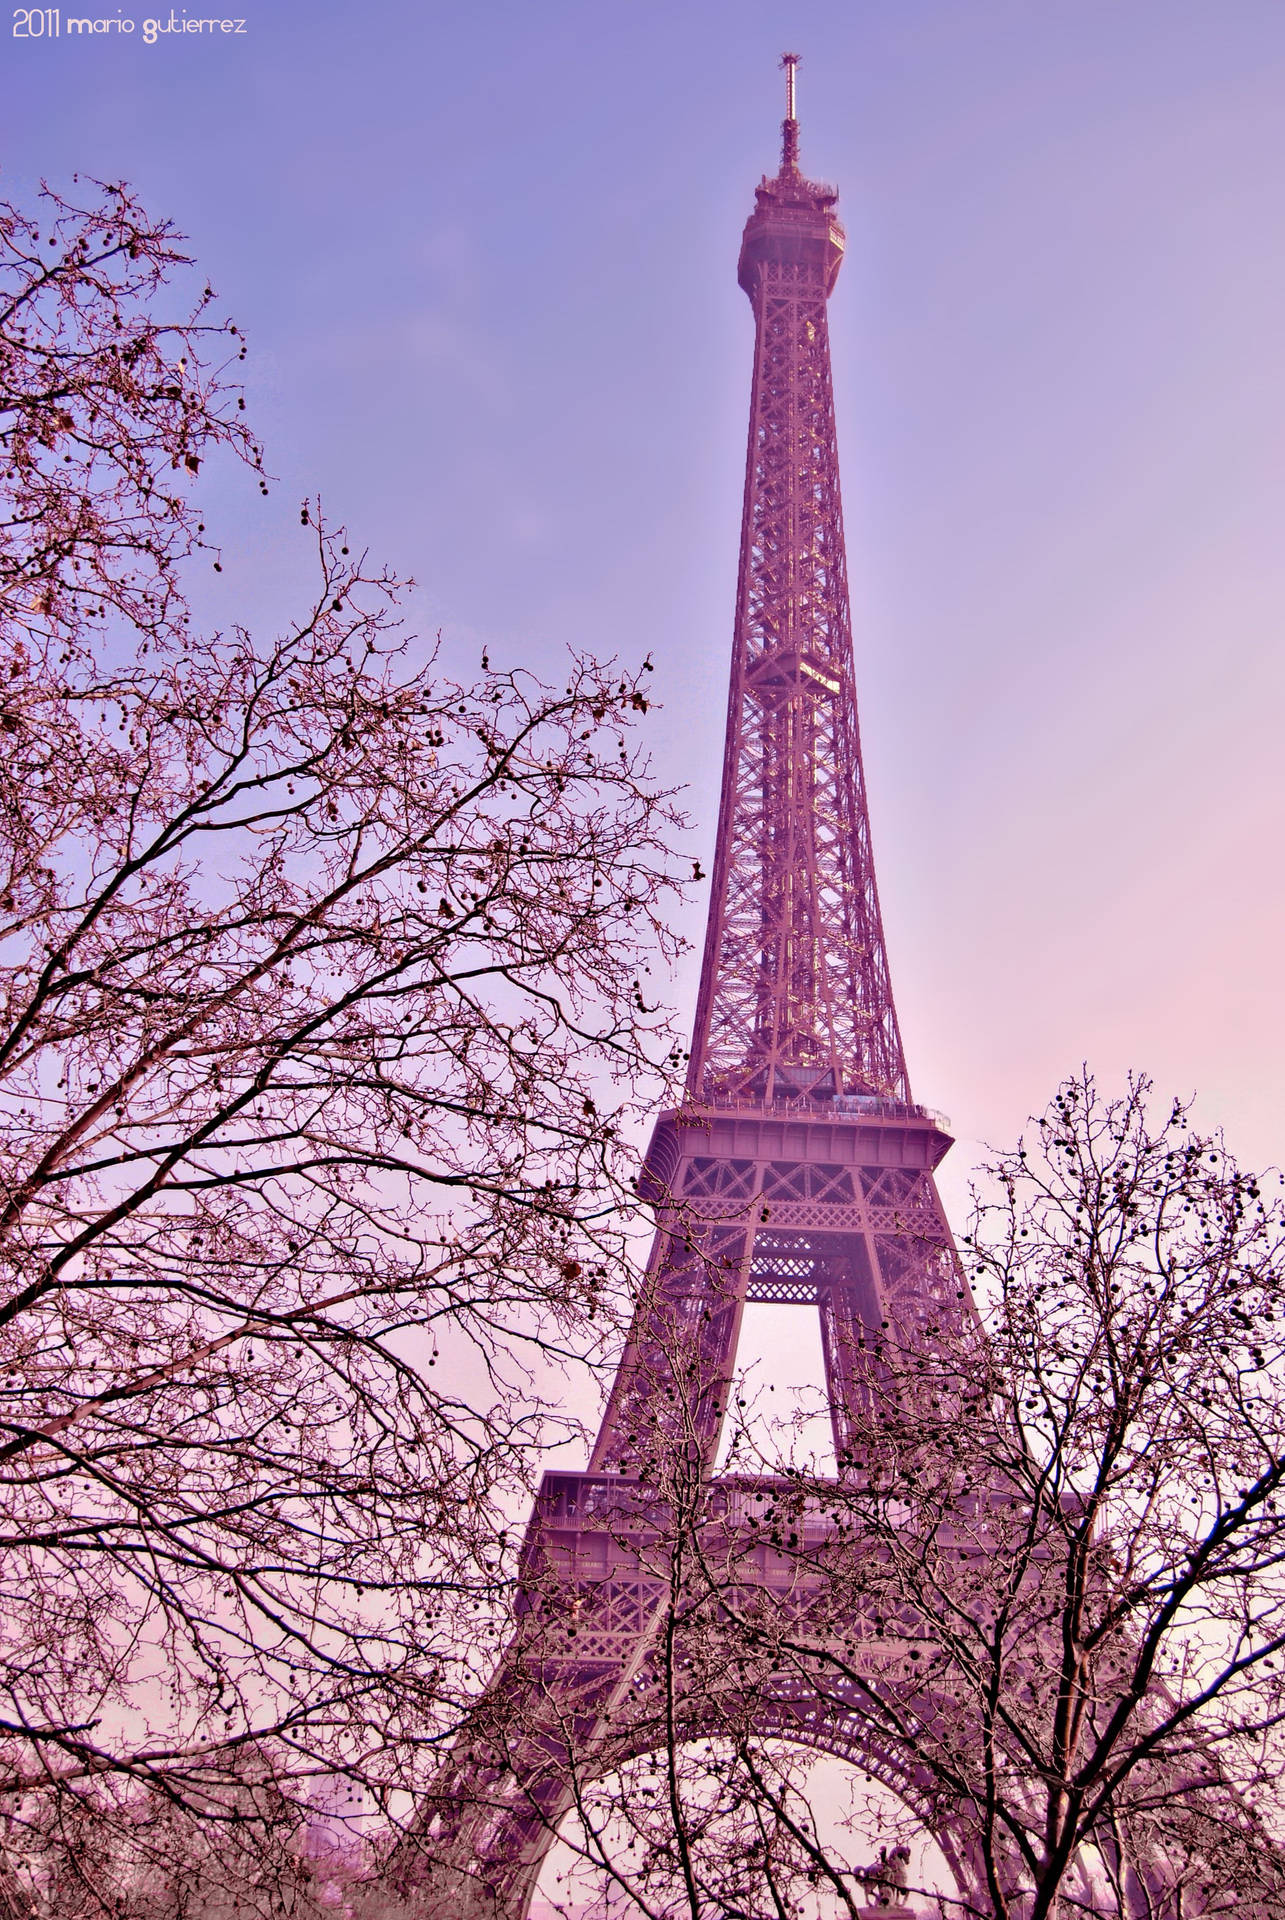 "The breathtaking Eiffel tower in Paris, France" Wallpaper